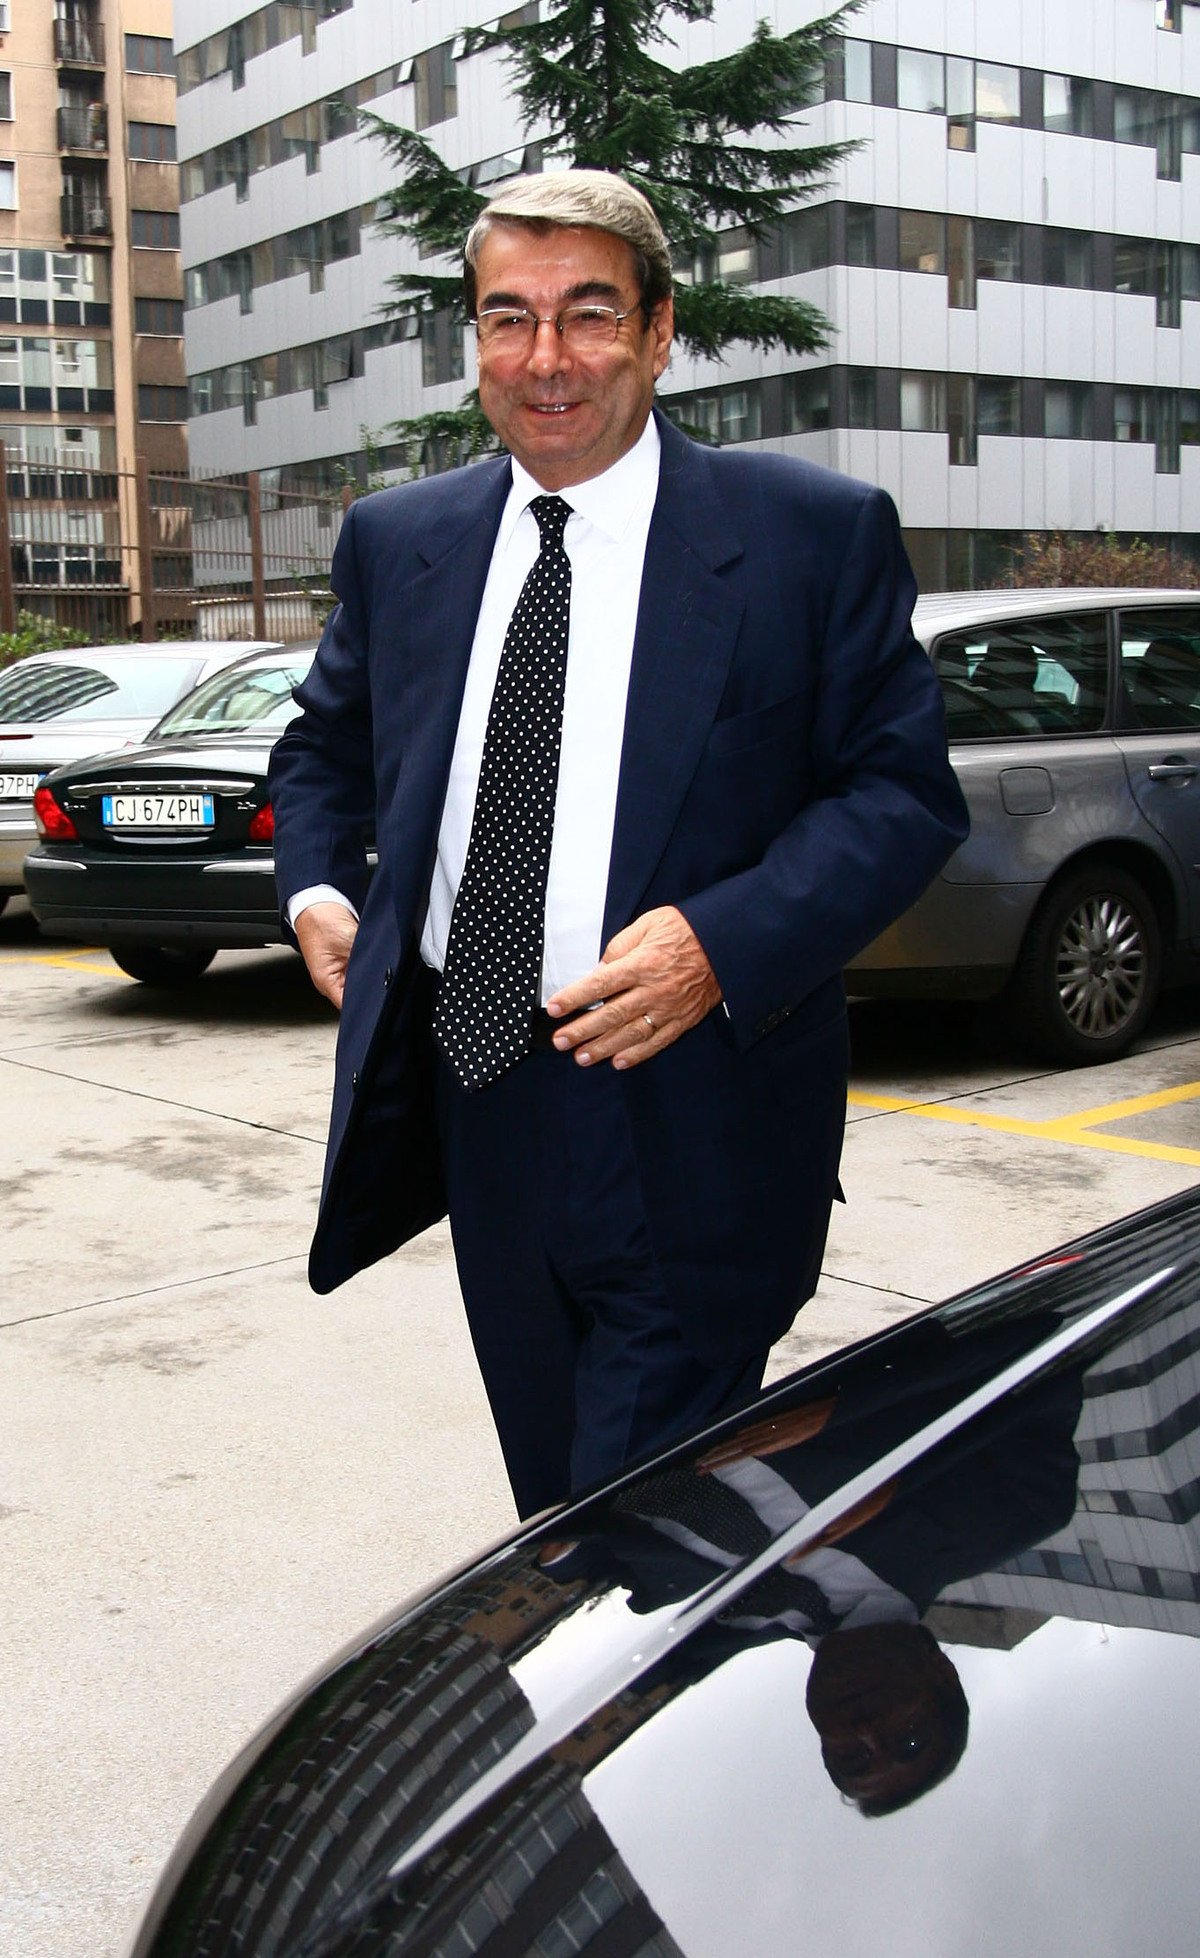 Aldo Spinelli